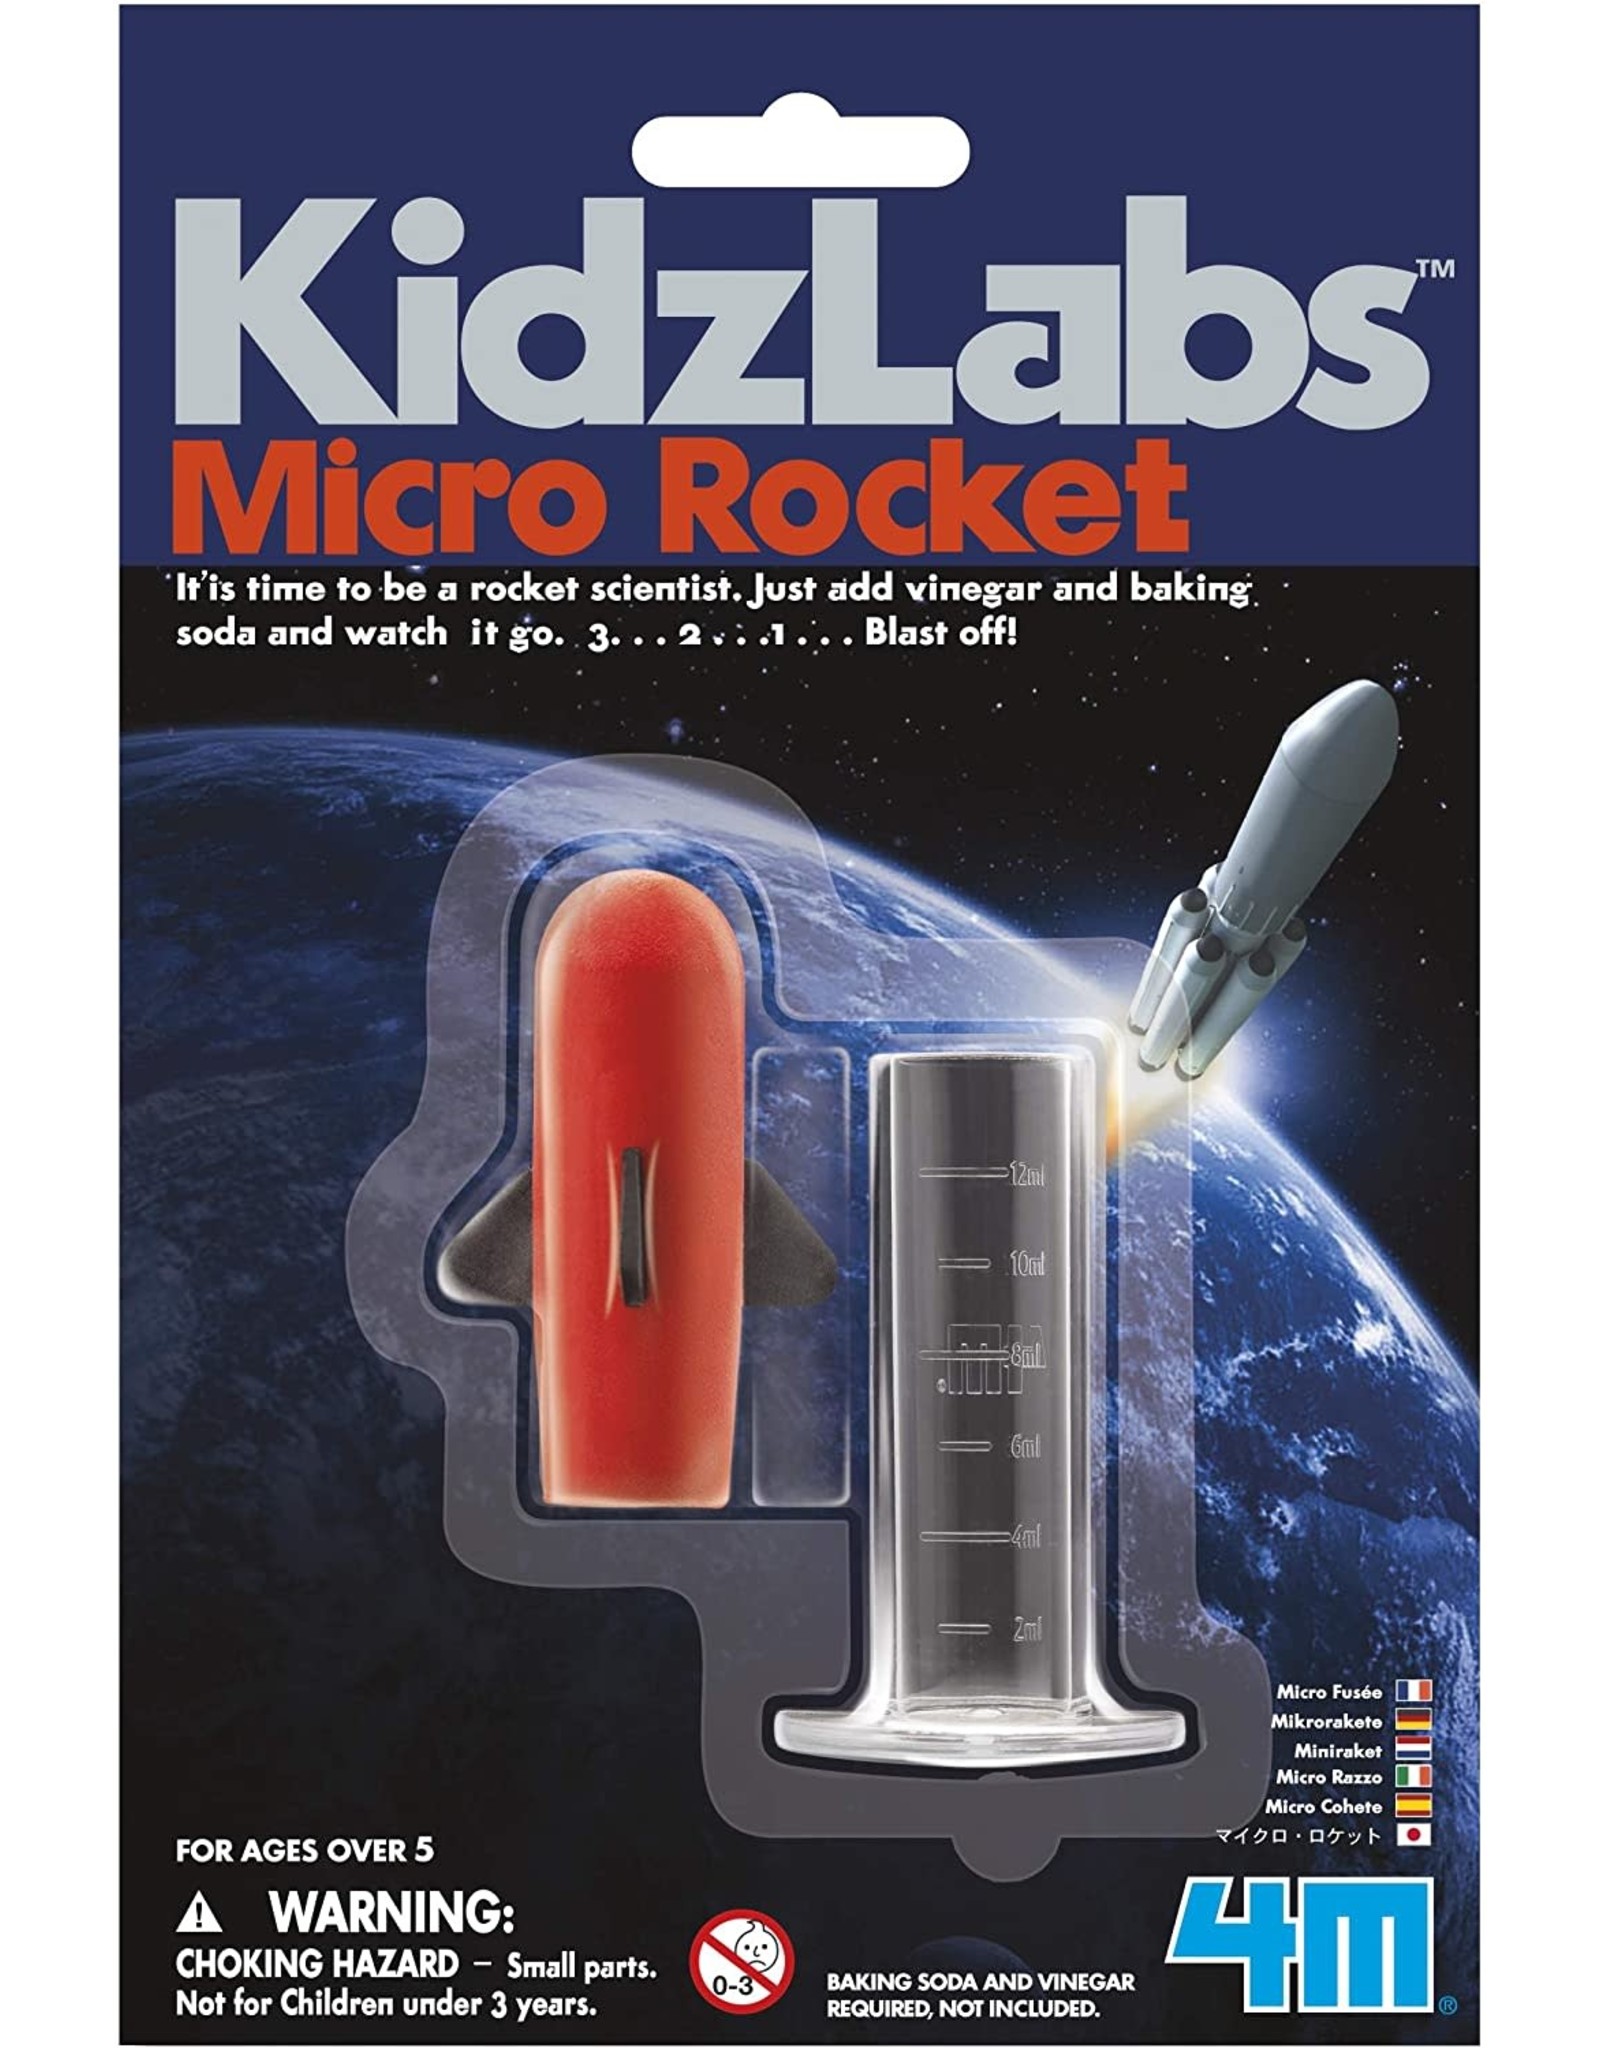 Micro Rocket Launcher